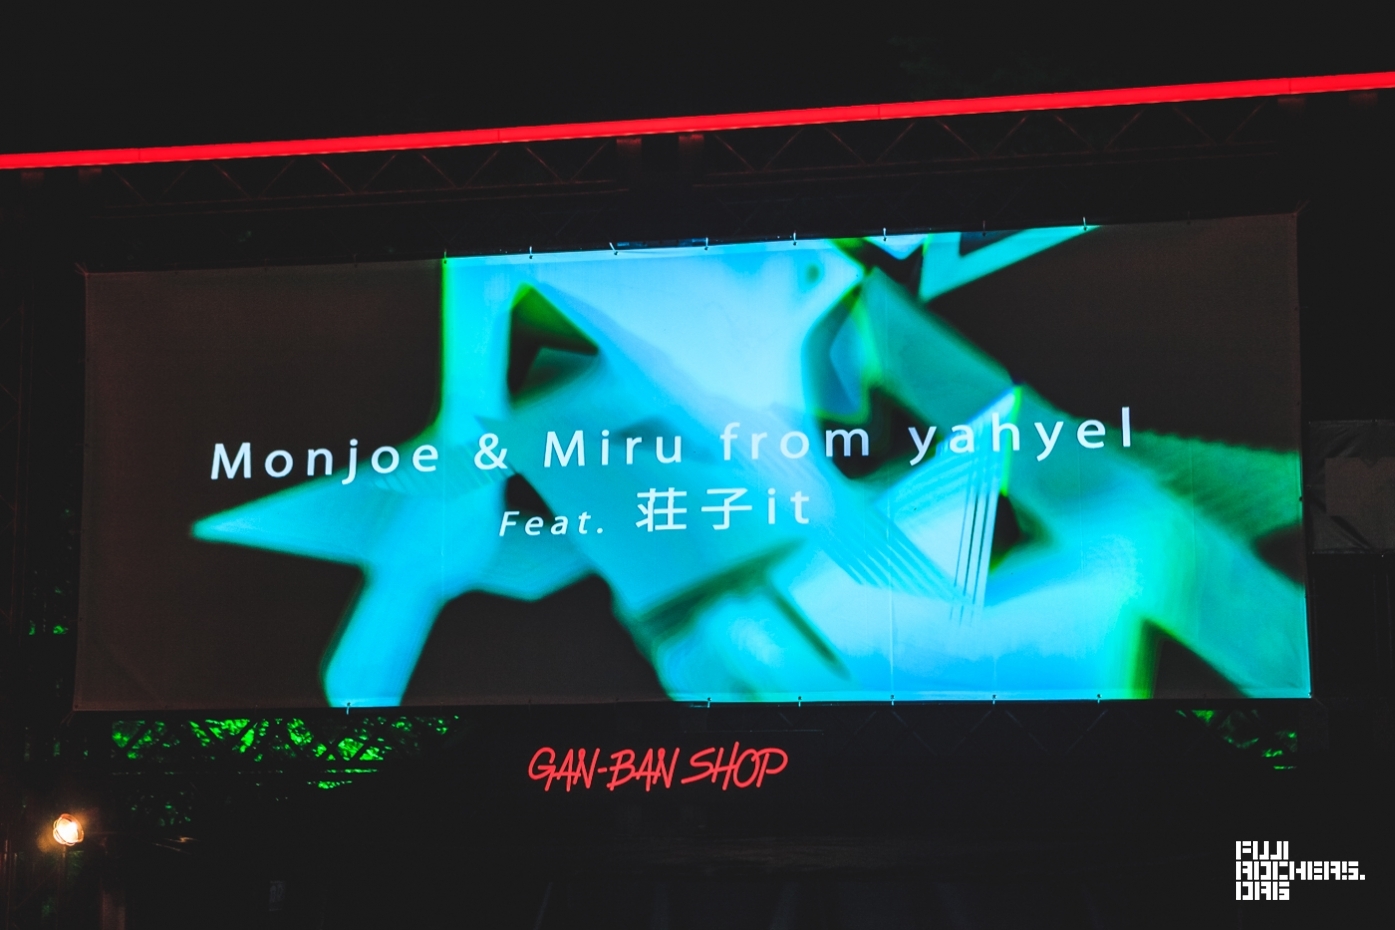 Monjoe & Miru from yahyel  Feat. 荘子it